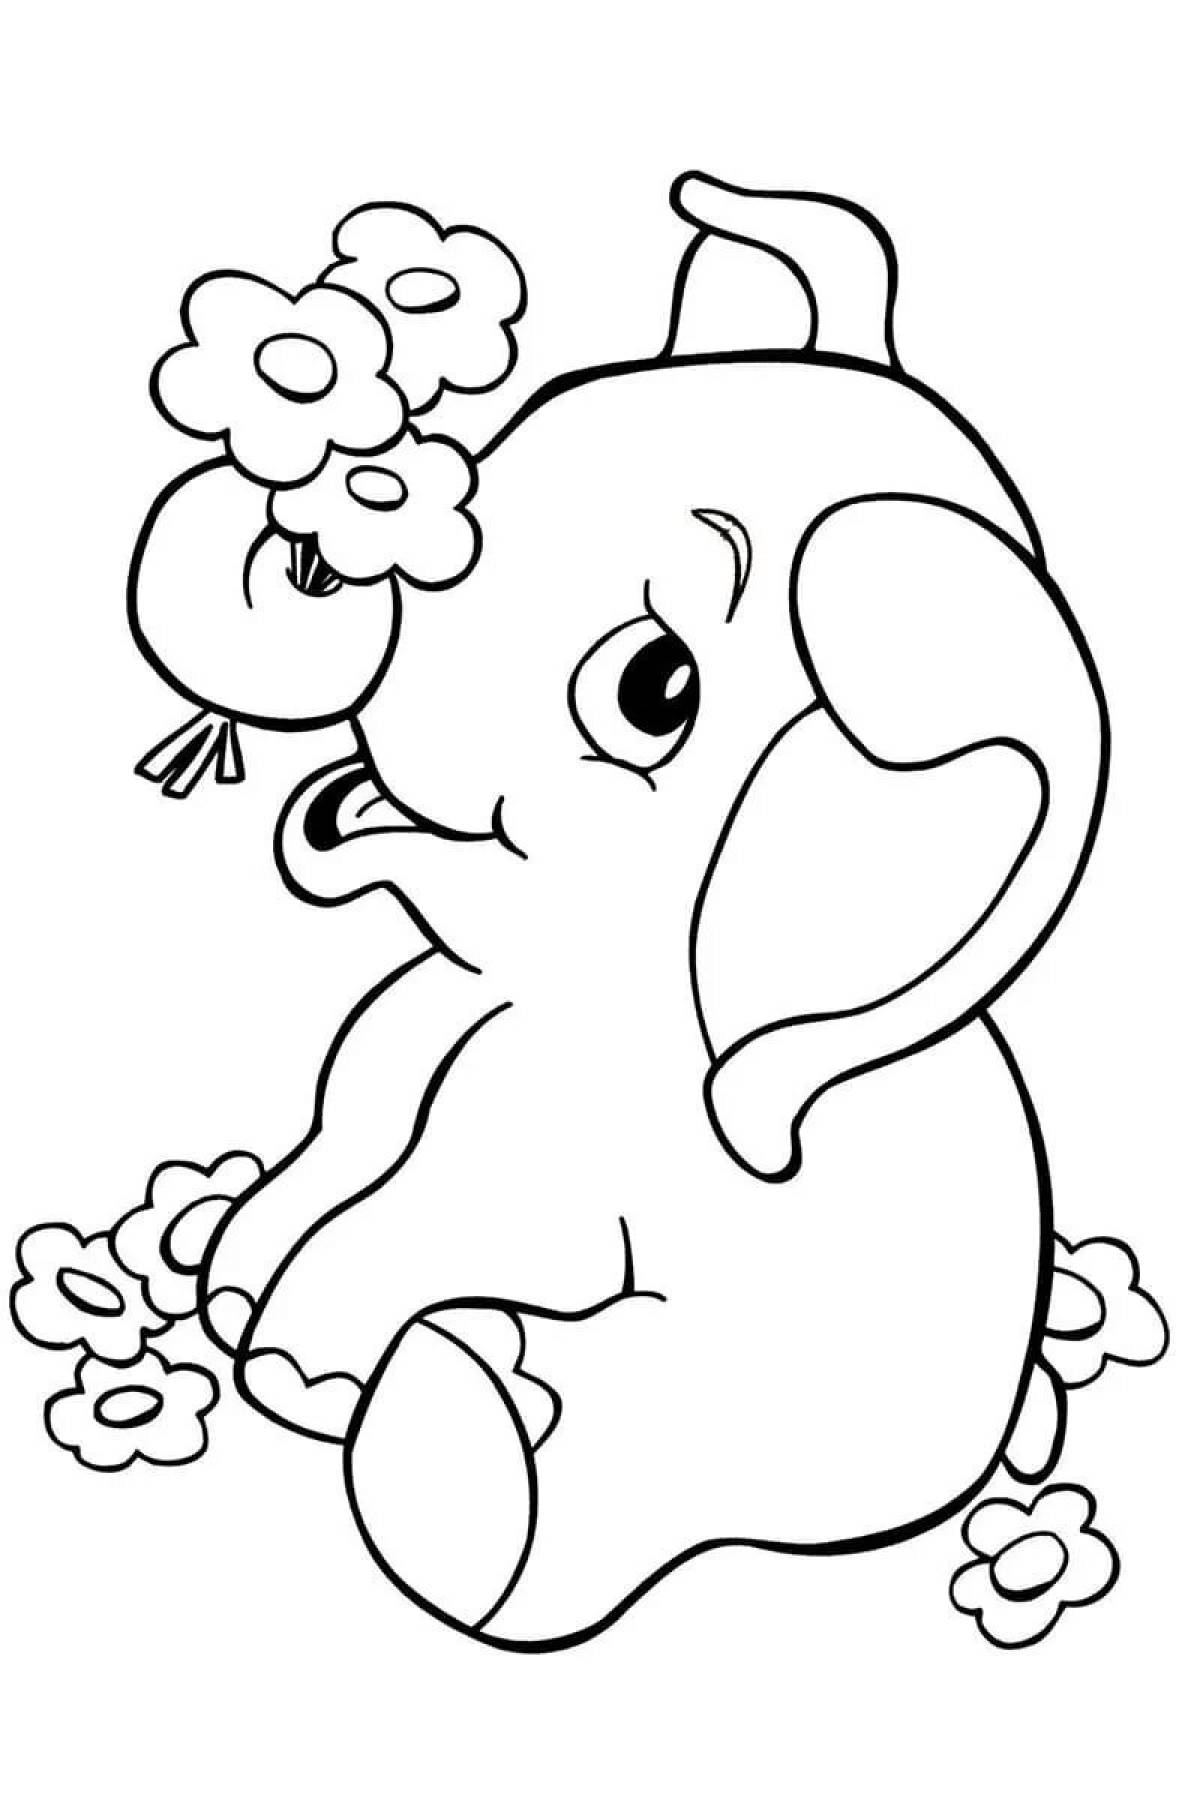 Animal drawings for kids #14